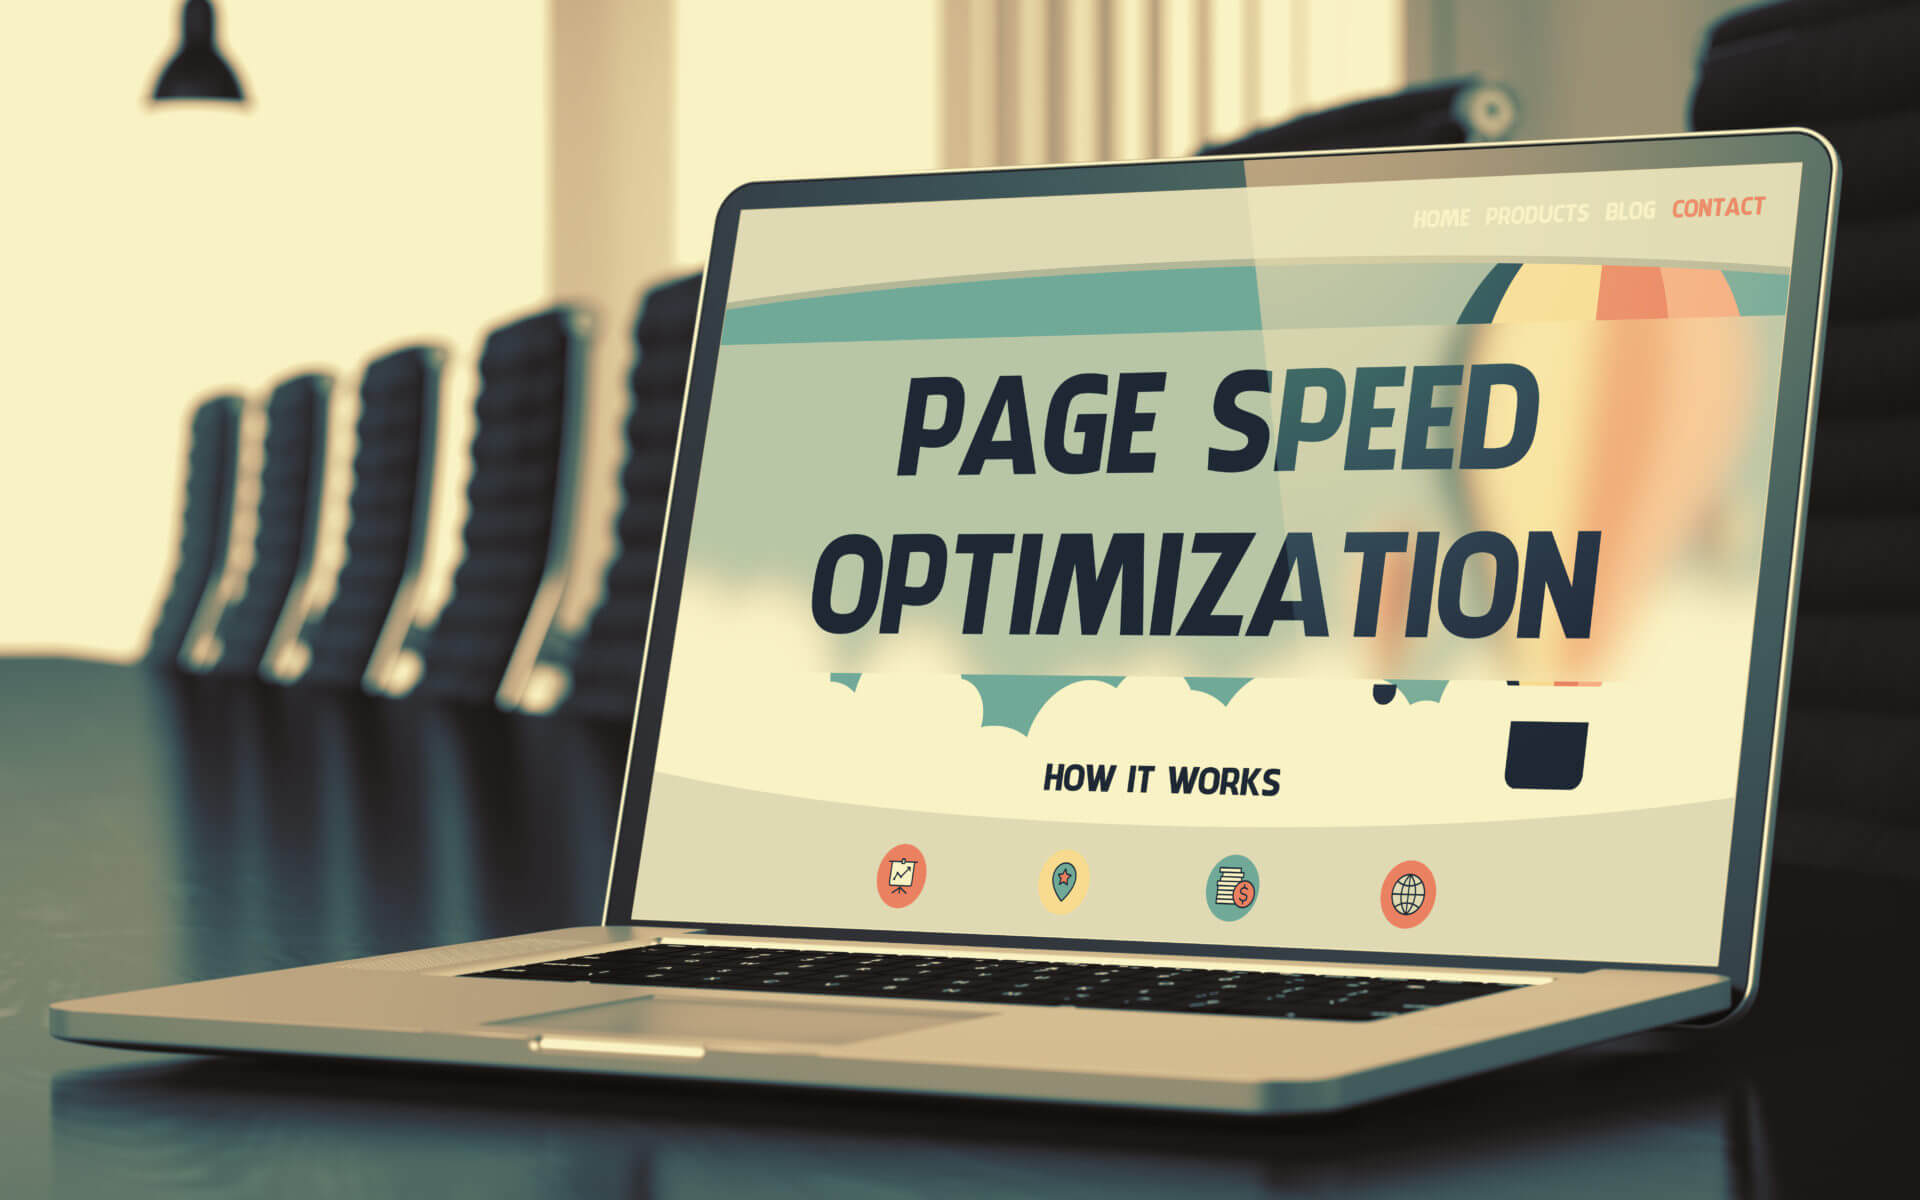 how to improve website speed